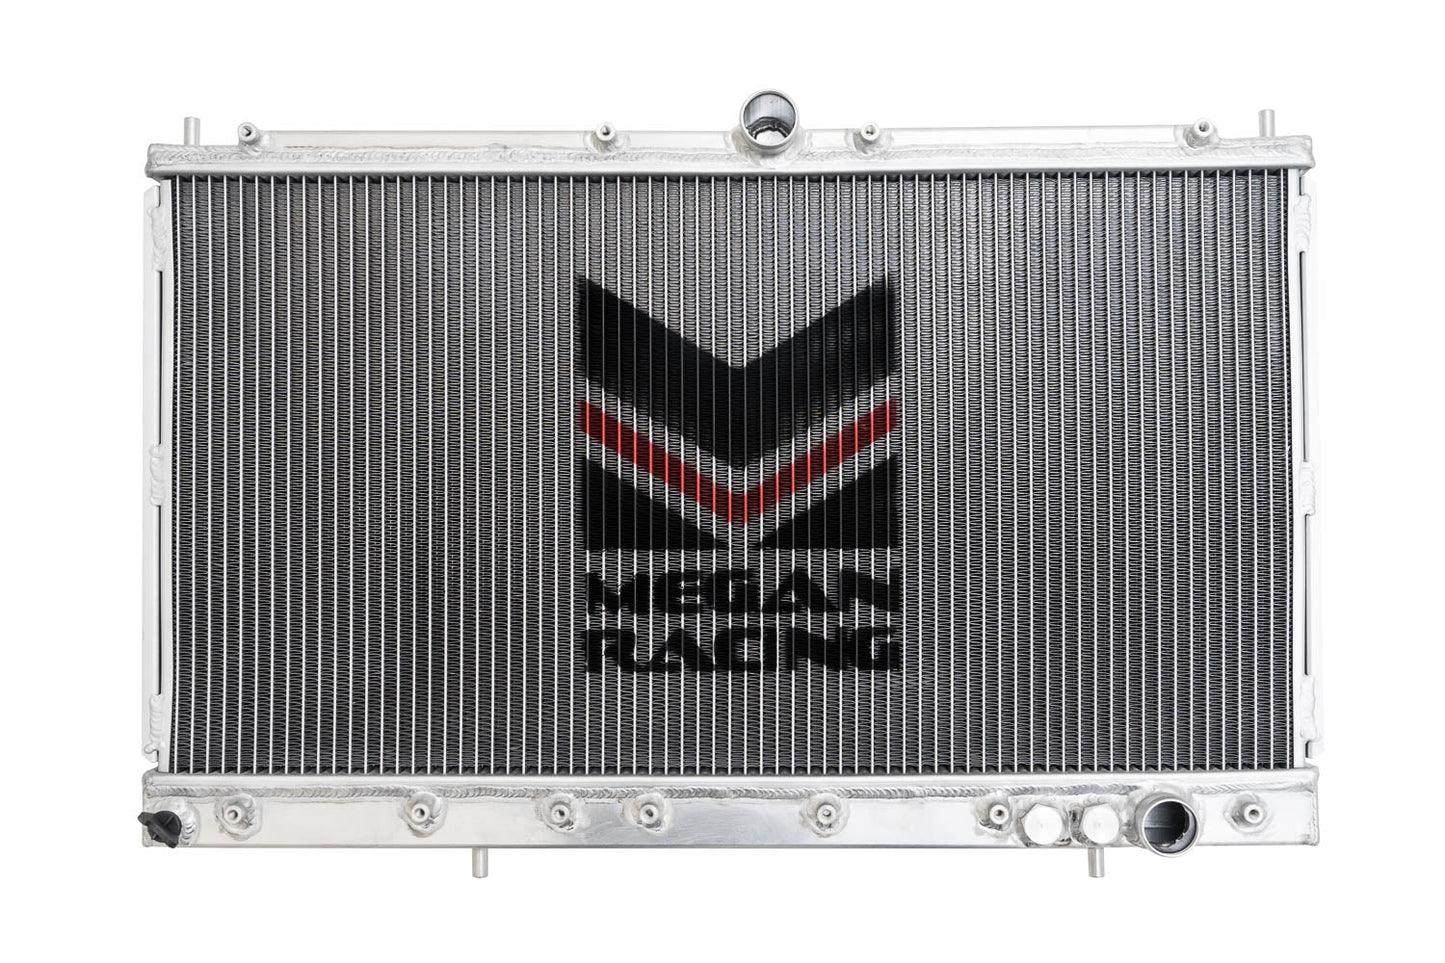 Radiator for Mitsubishi 3000GT VR4  - MR-RT-M3GT